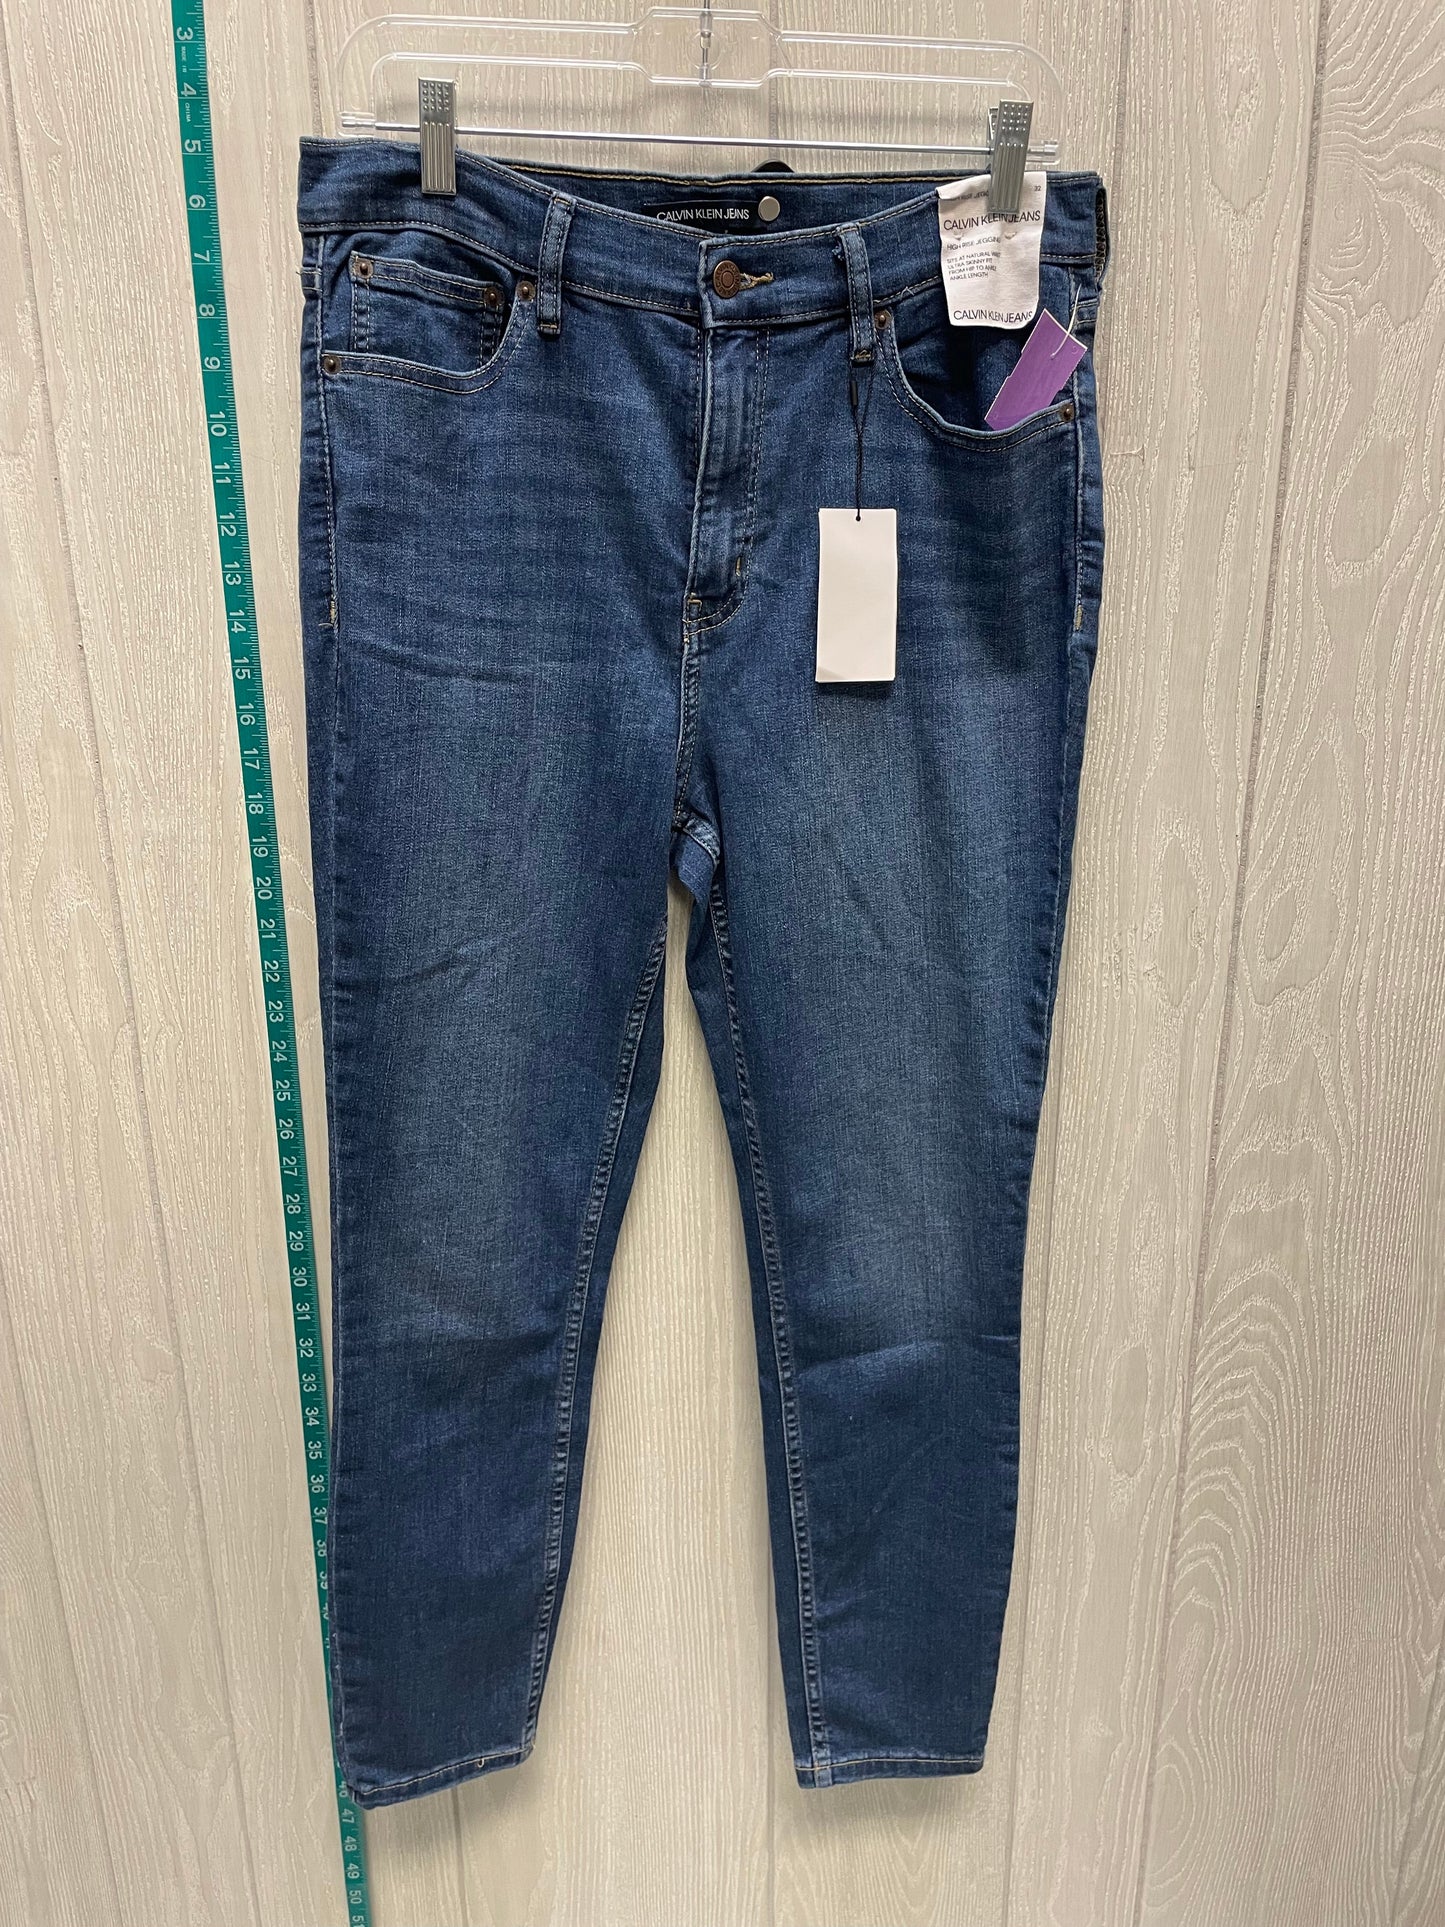 Blue Denim Jeans Skinny Calvin Klein, Size 8